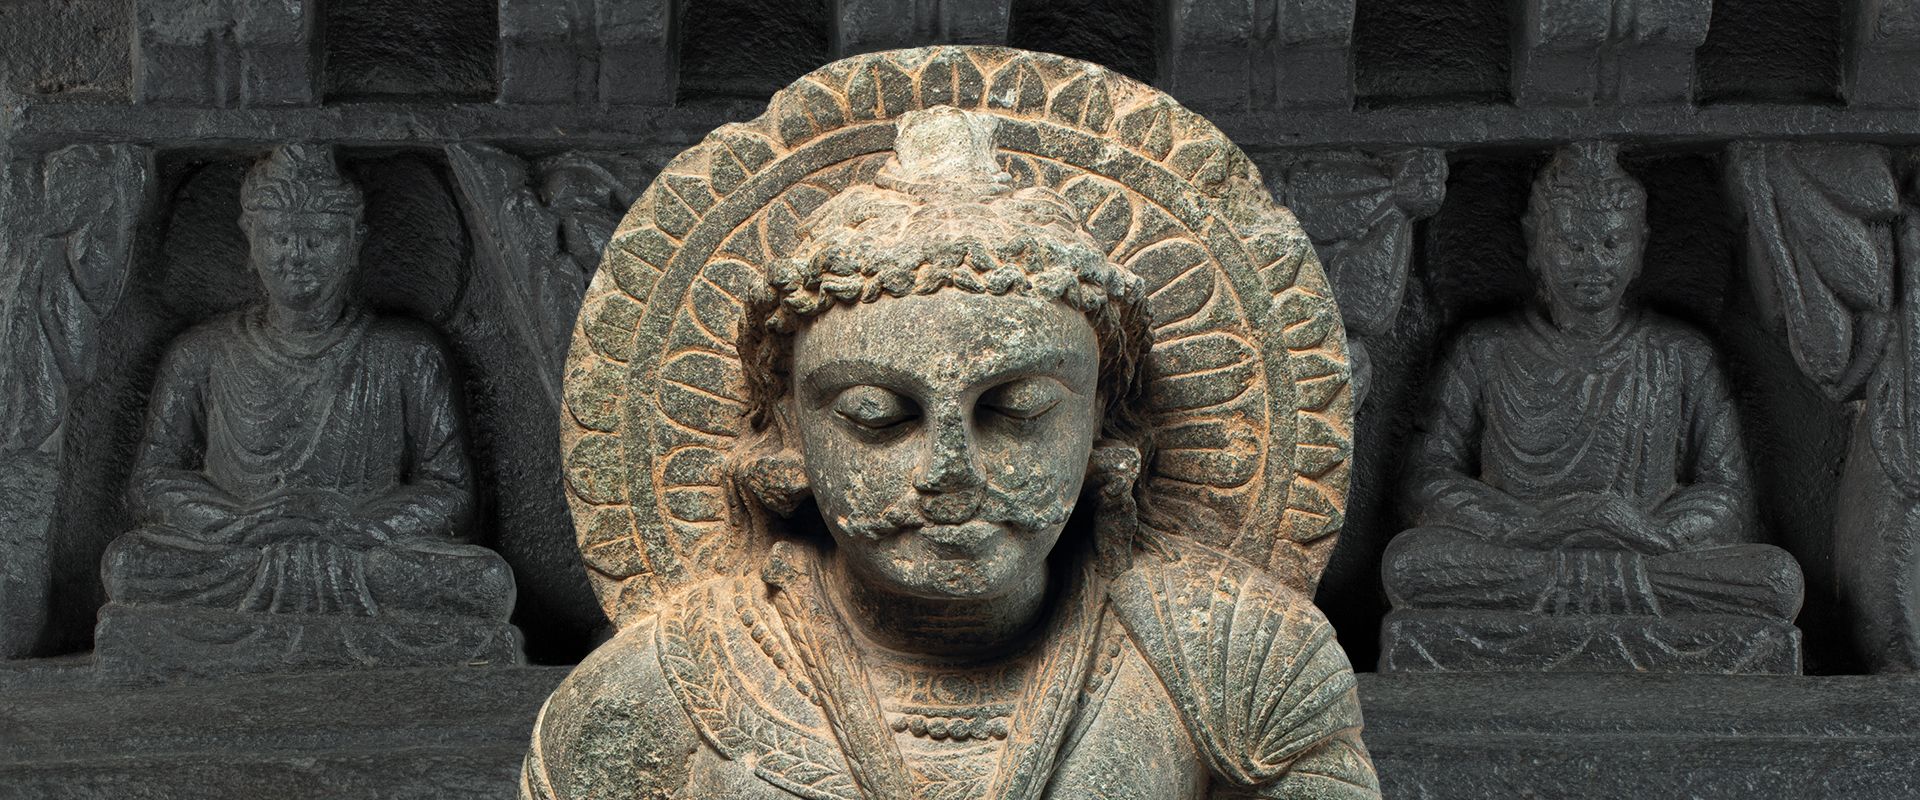 Forthcoming exhibition:
Land of Buddhas – Gandhāra